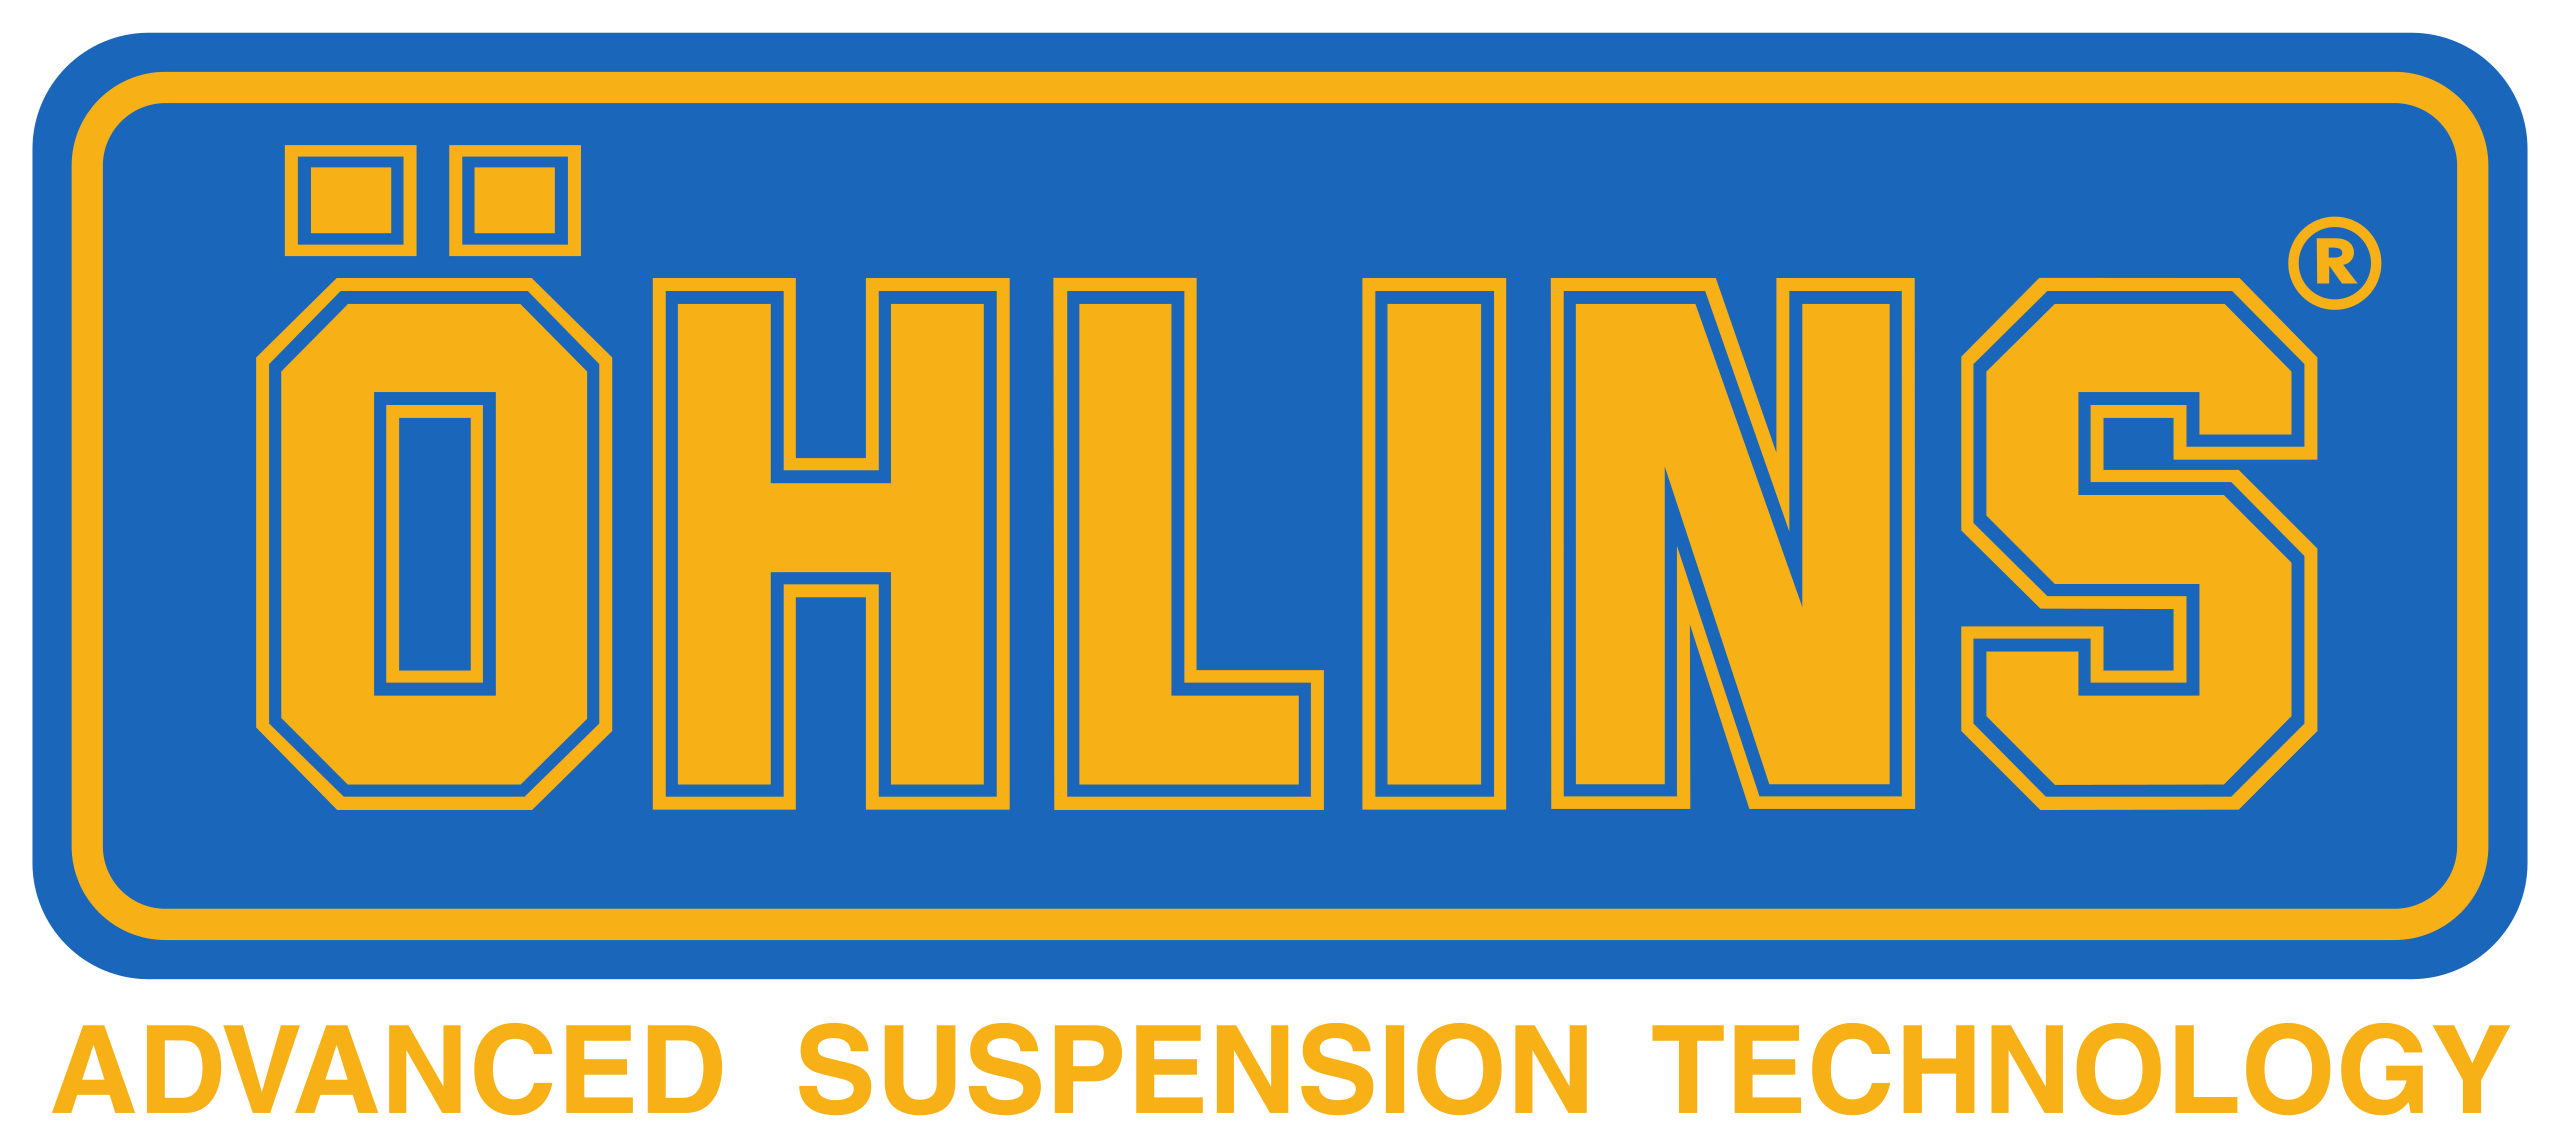 BMC - Oehlins logo